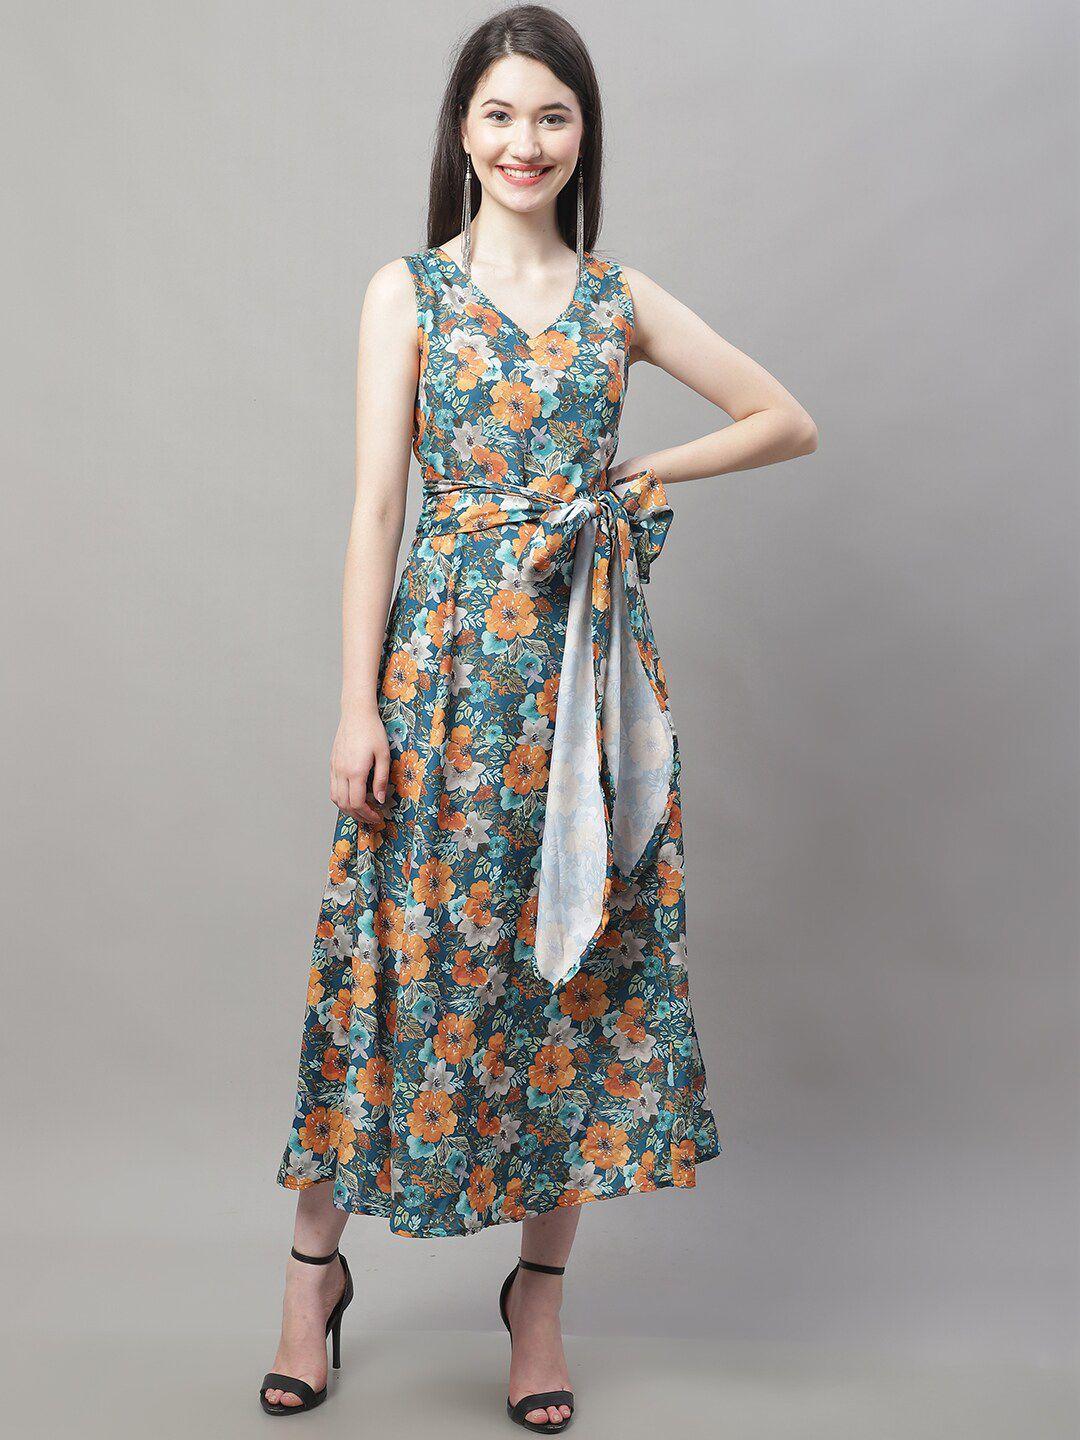 jainish v-neck floral print maxi dress